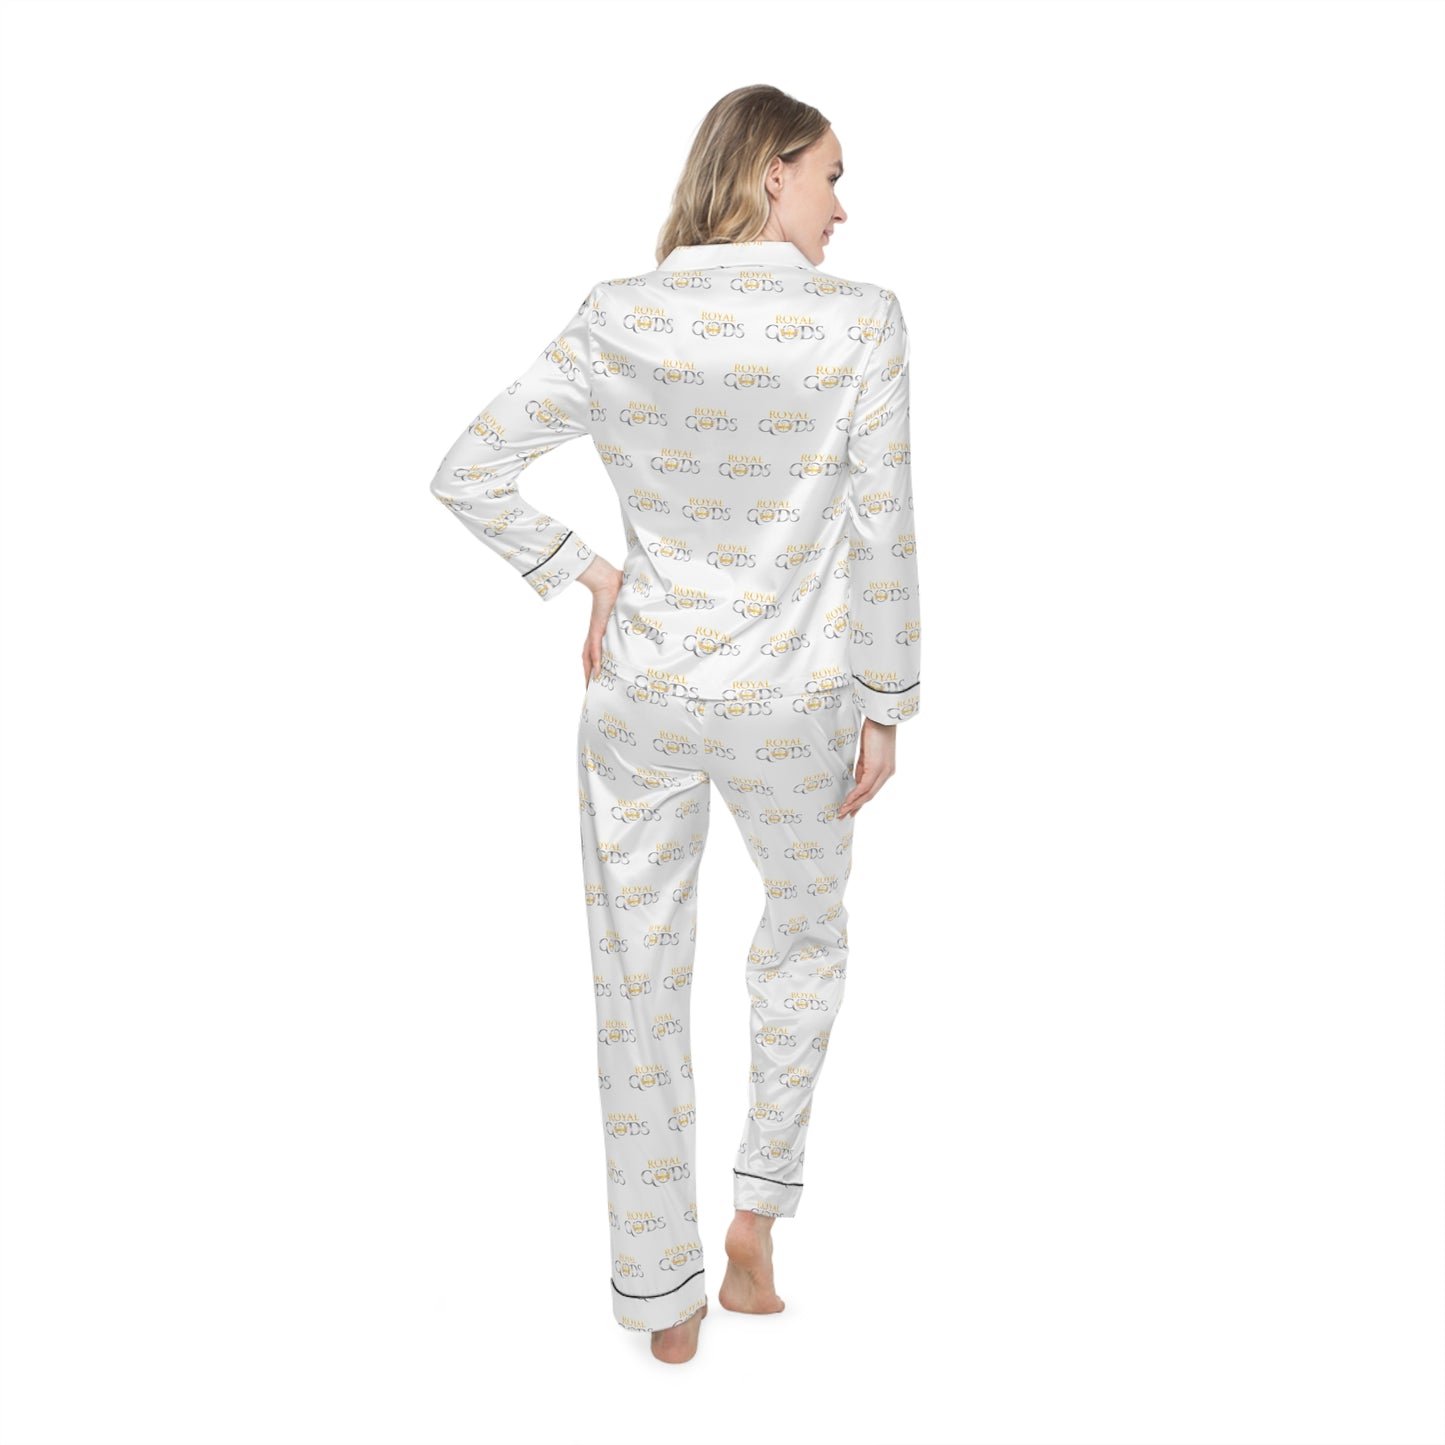 Royal Gods Women's Satin Pajama Set - White